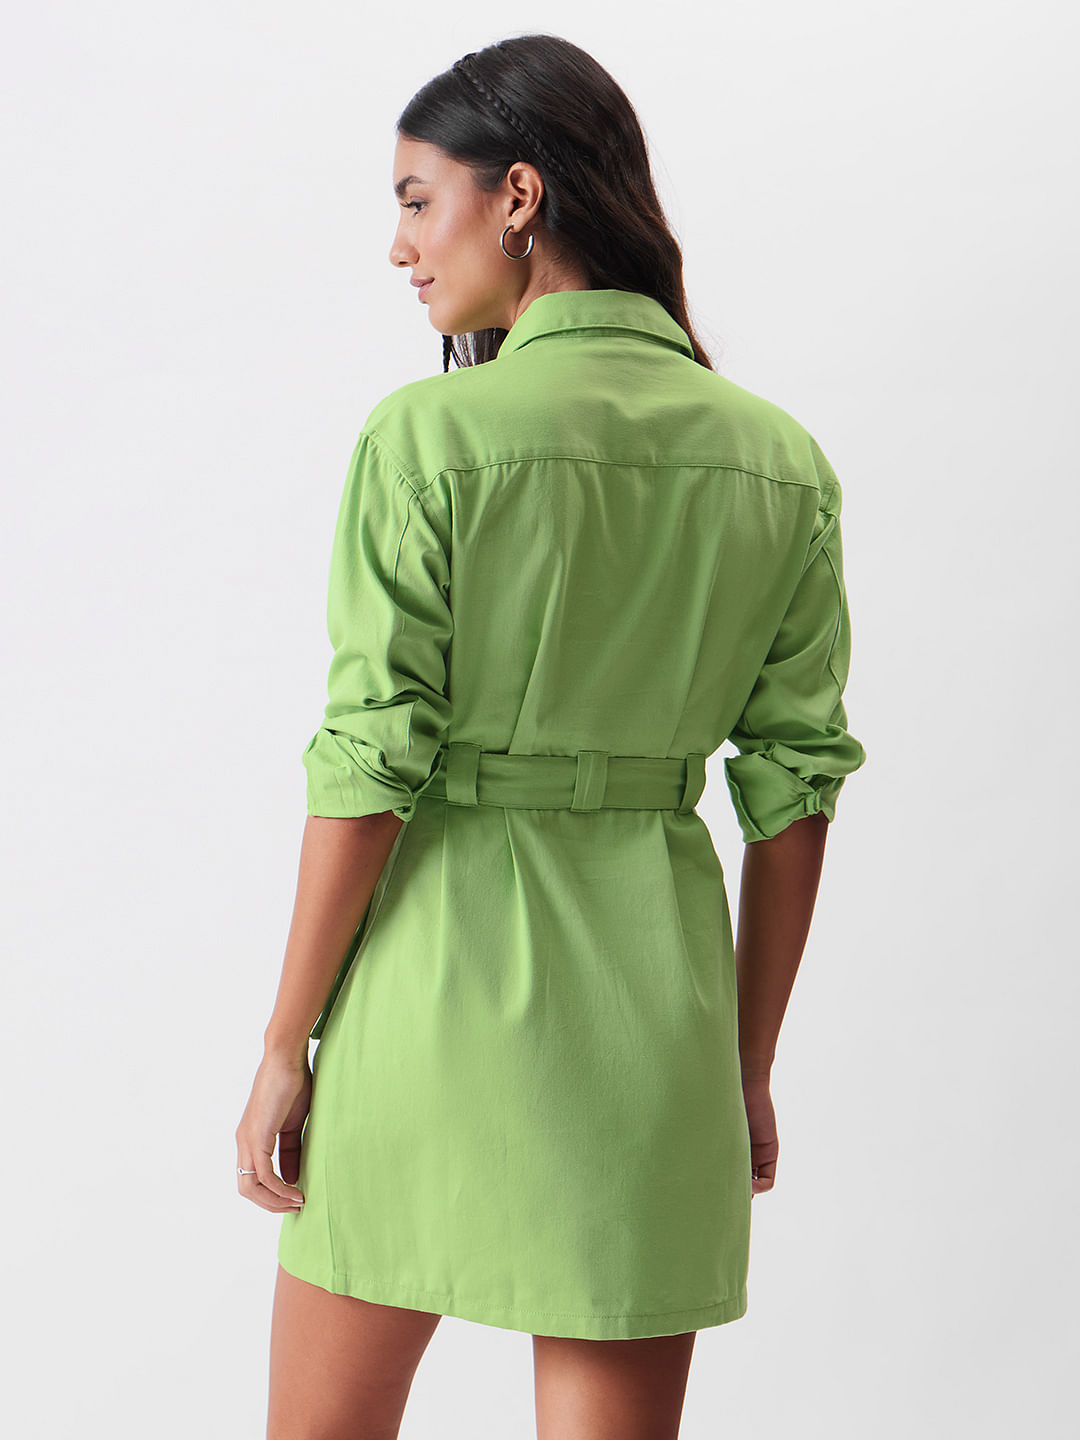 Buy Solids: Light Olive Women Dress Online